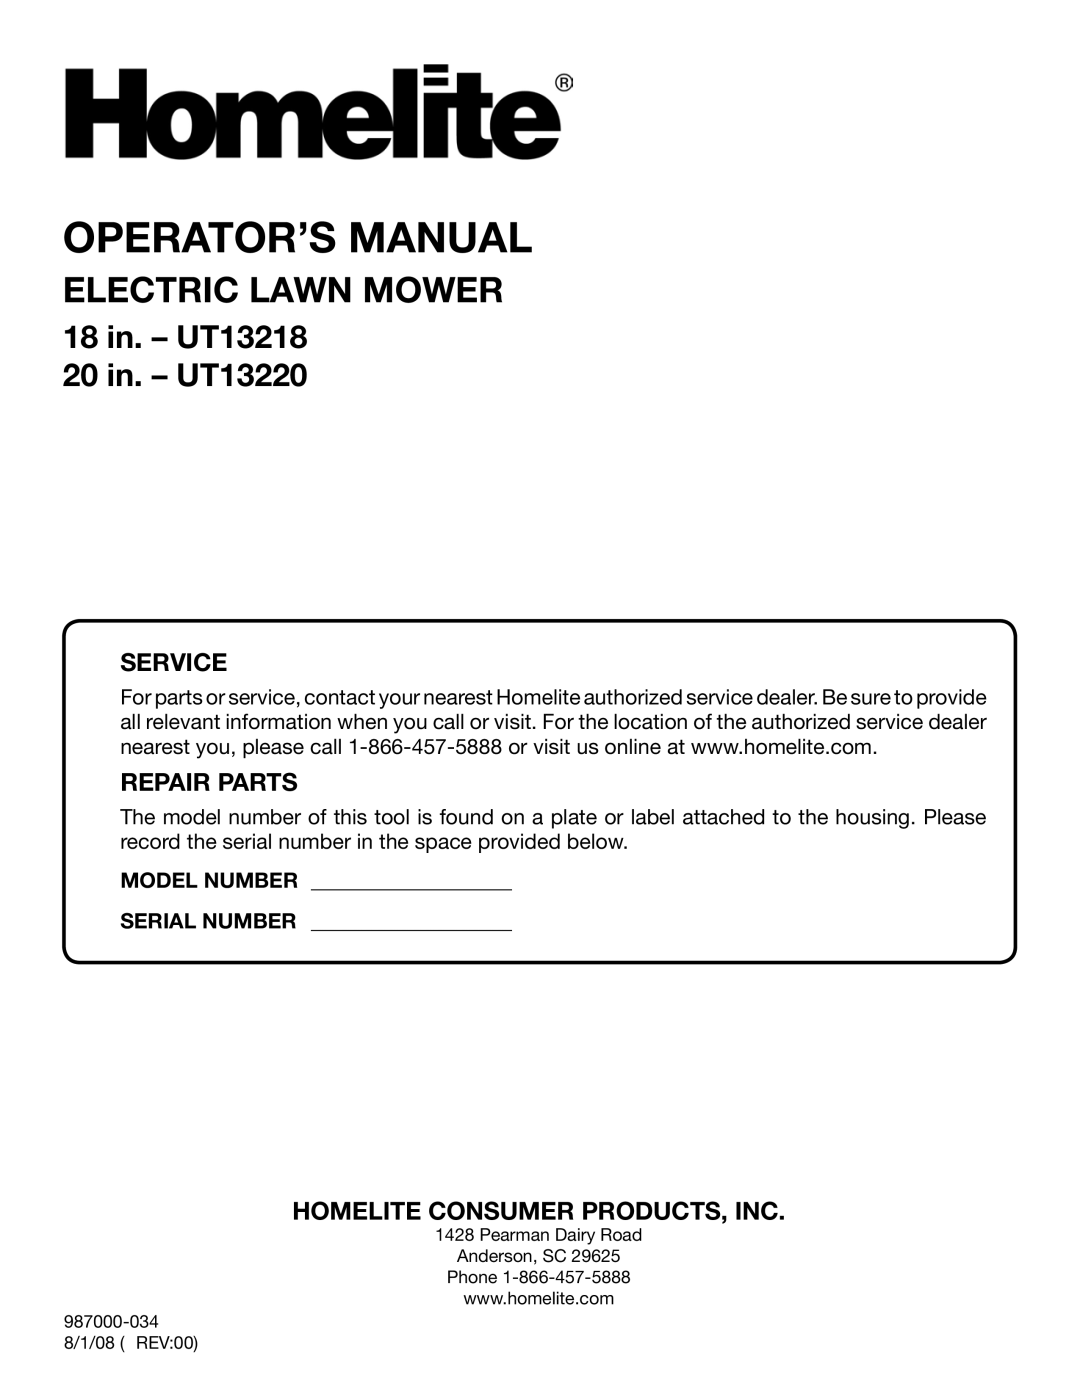 Homelite UT13218, UT13220 Service, Repair Parts, Homelite Consumer Products, Inc, Operator’S Manual, Electric Lawn Mower 